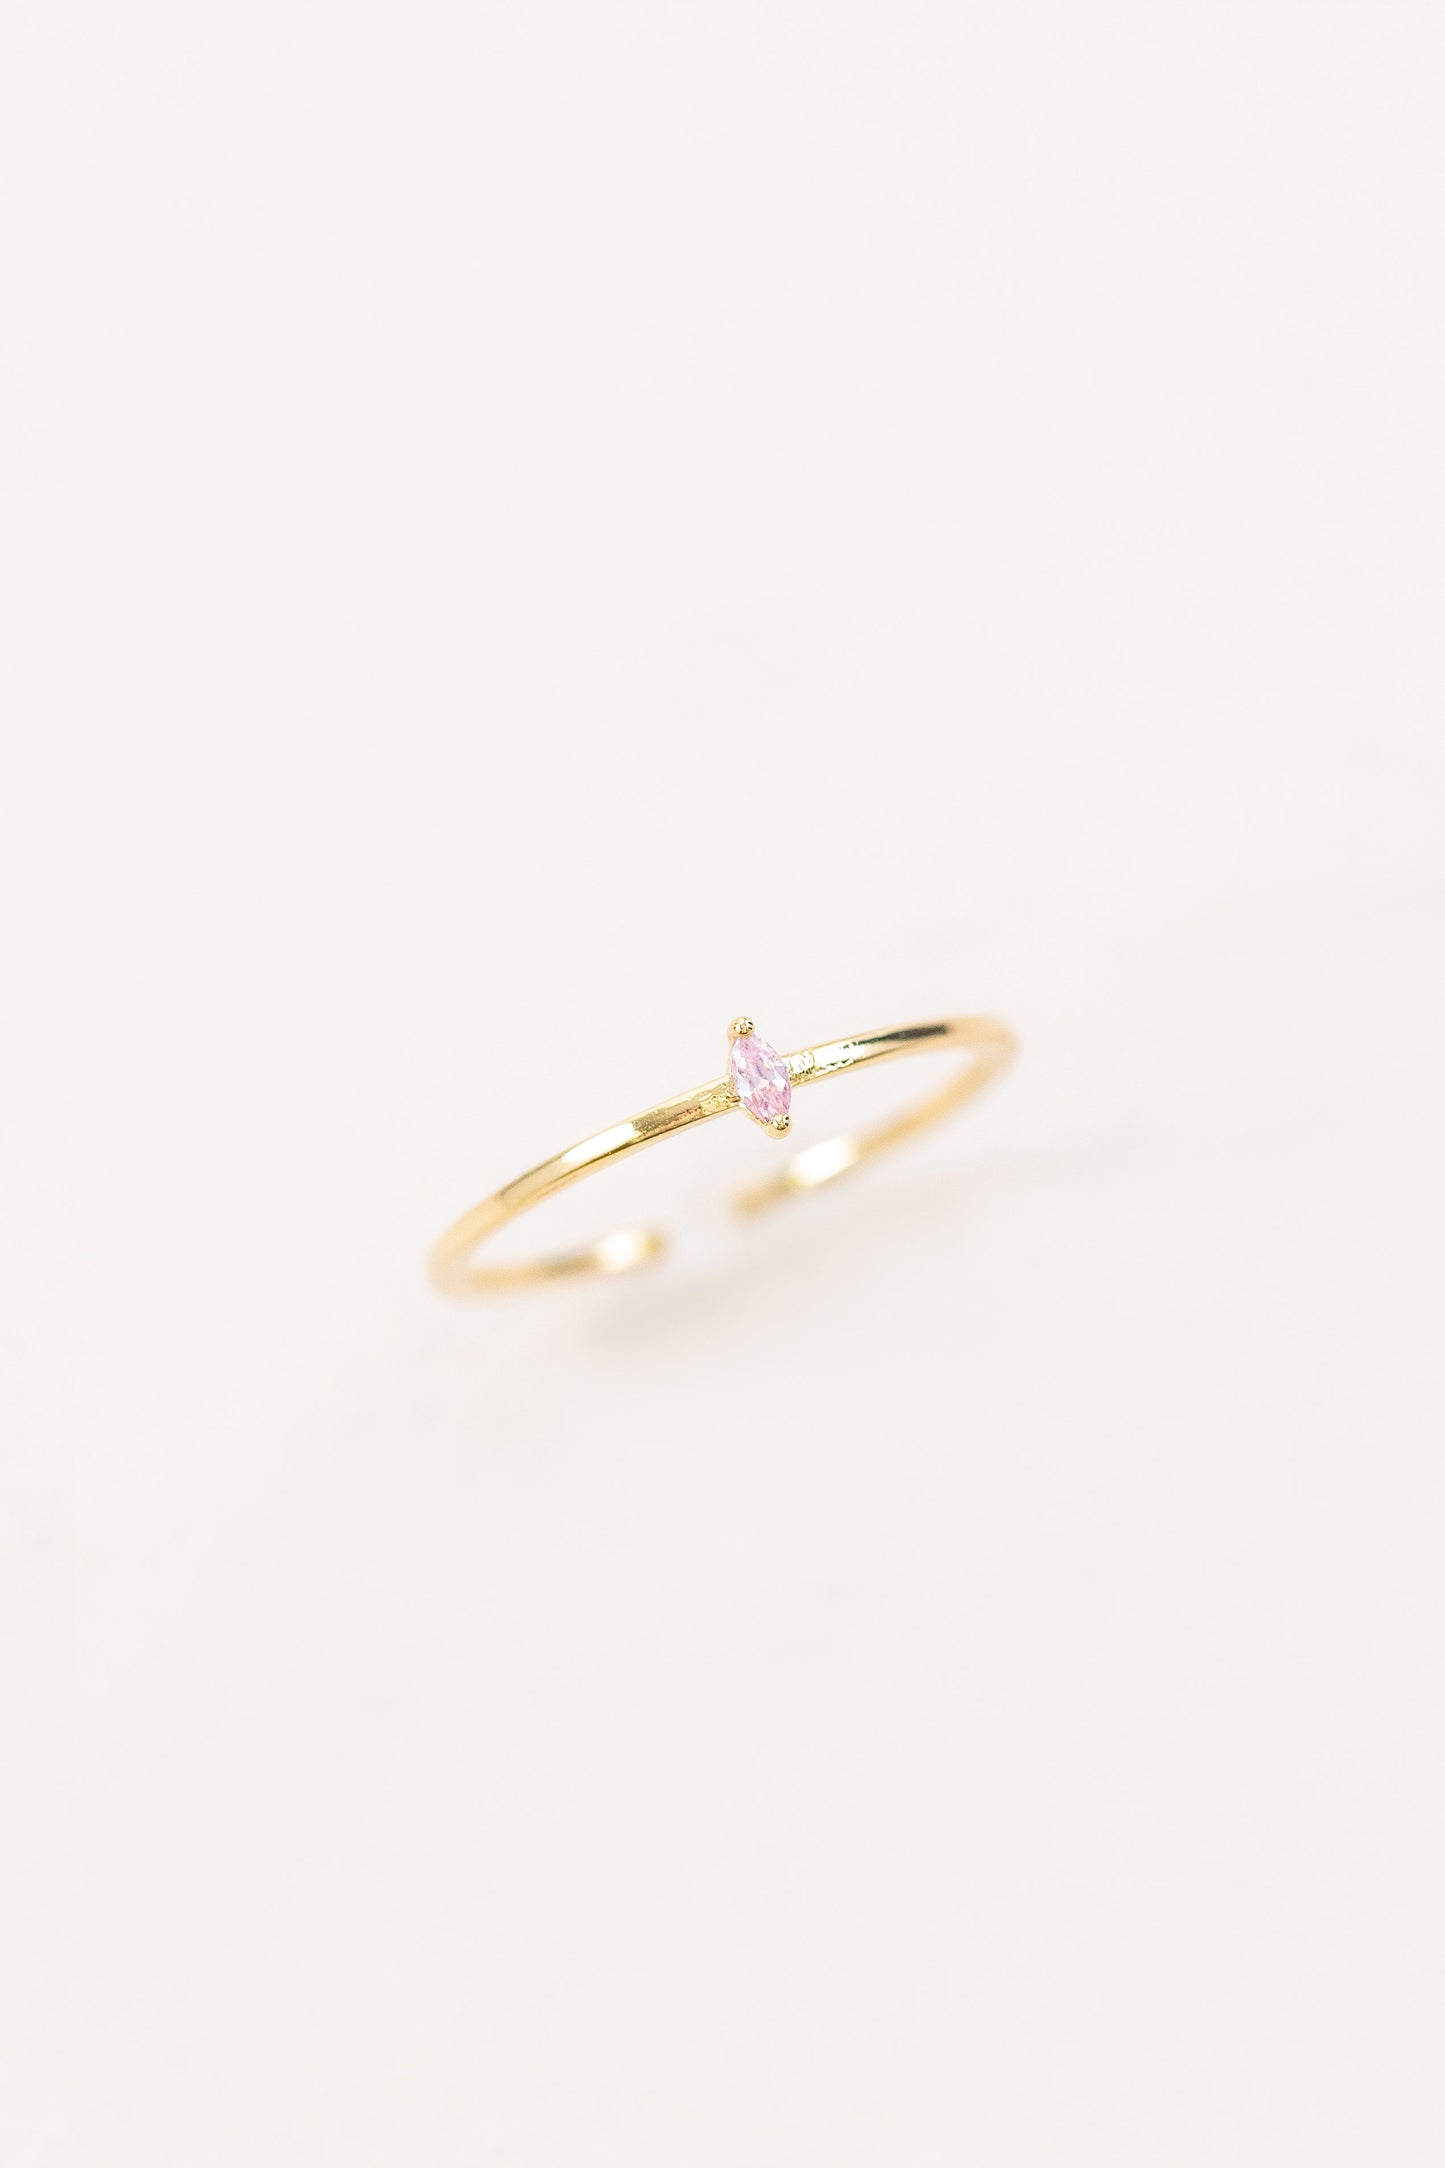 Solitary Simplicity Gem Stone Ring